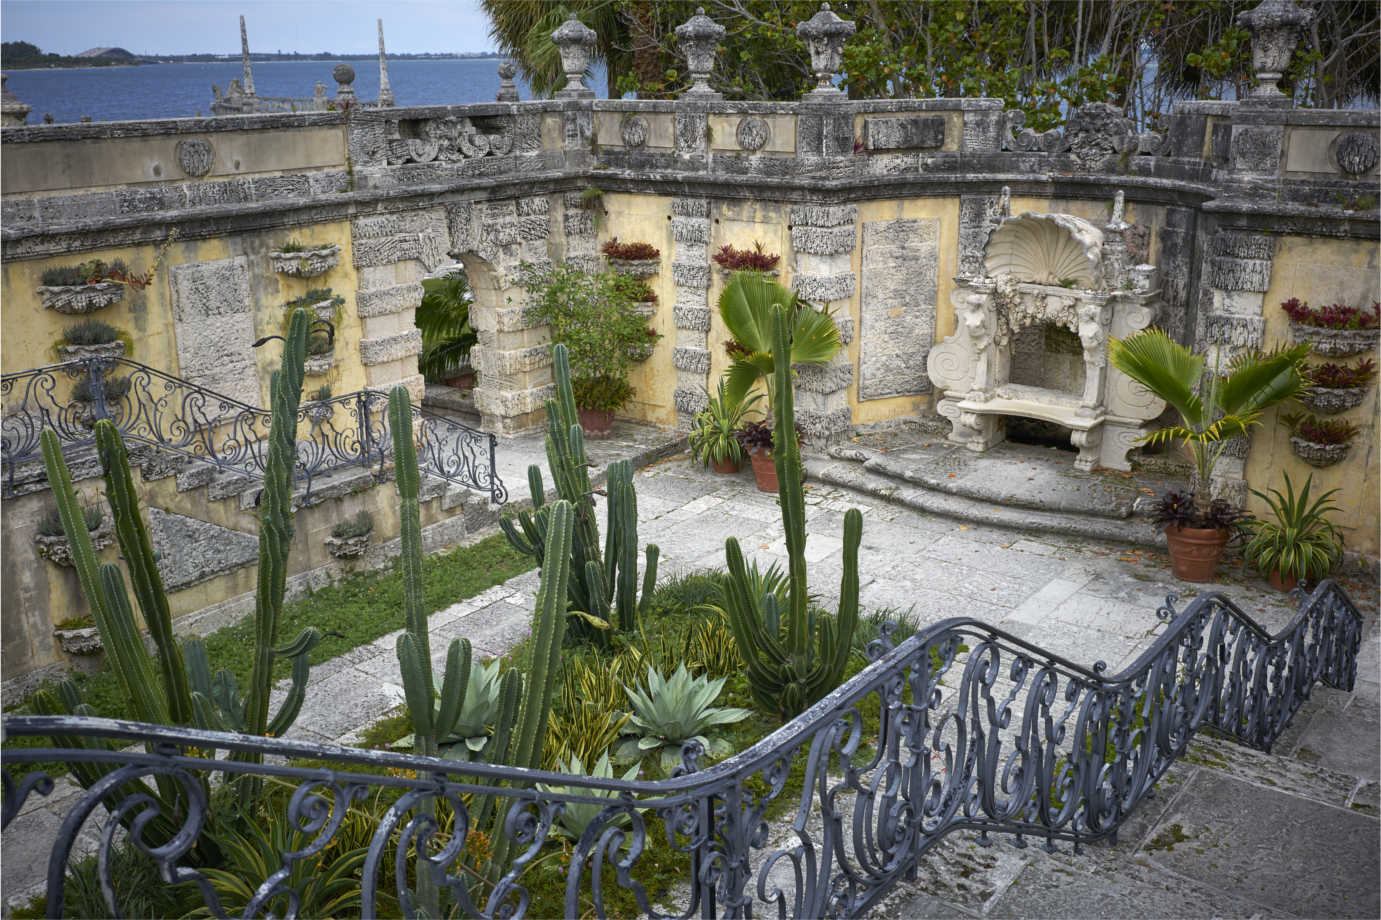 A courtyard at Vizcaya. Image courtesy of Vizcaya.